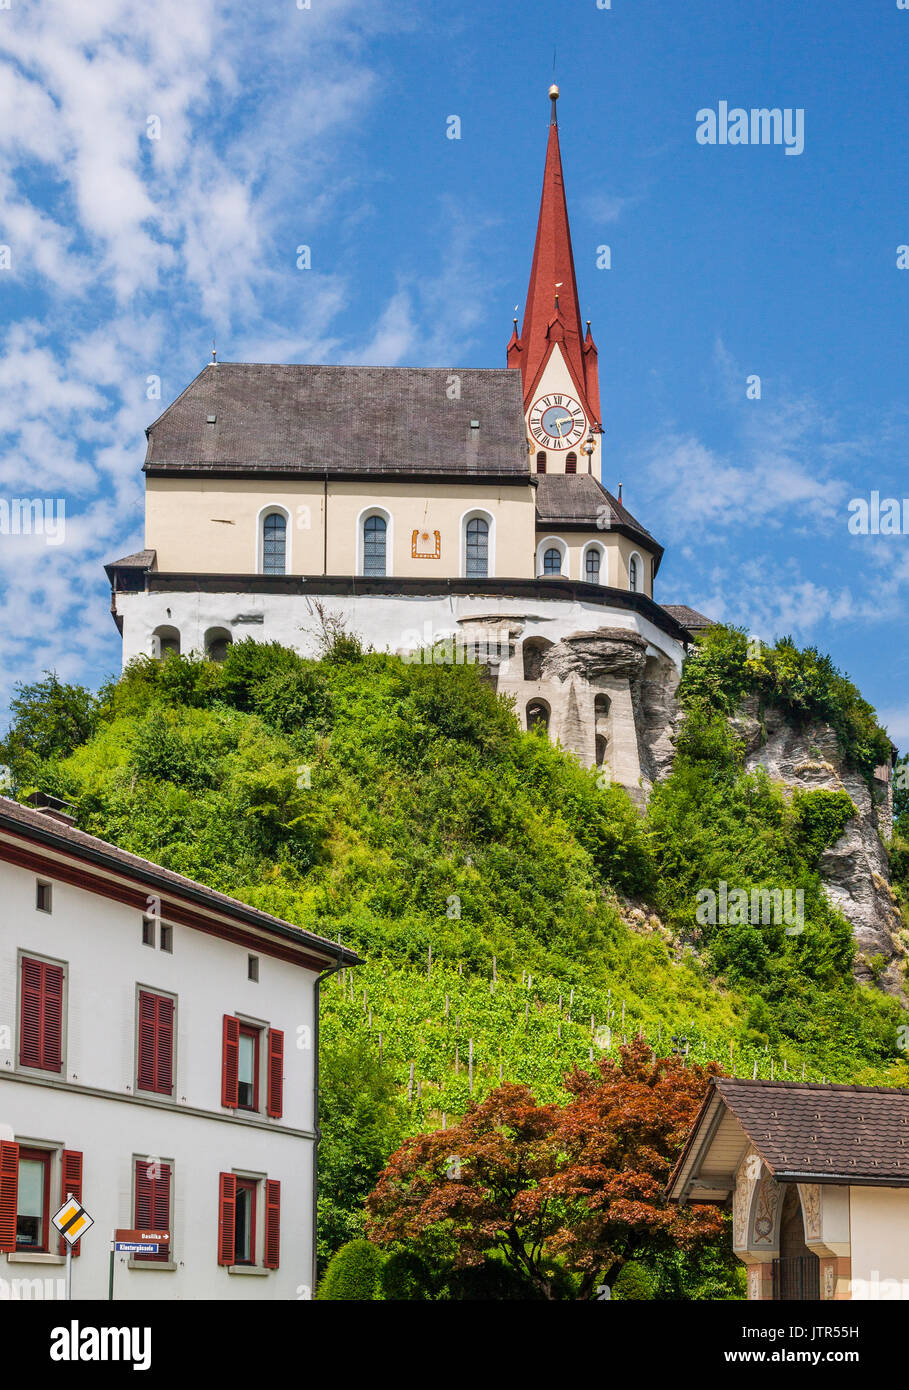 Austria, Vorarlberg, Rankweil, view of the 15th century fortified pilgramage church Basilika Rankweil Stock Photo